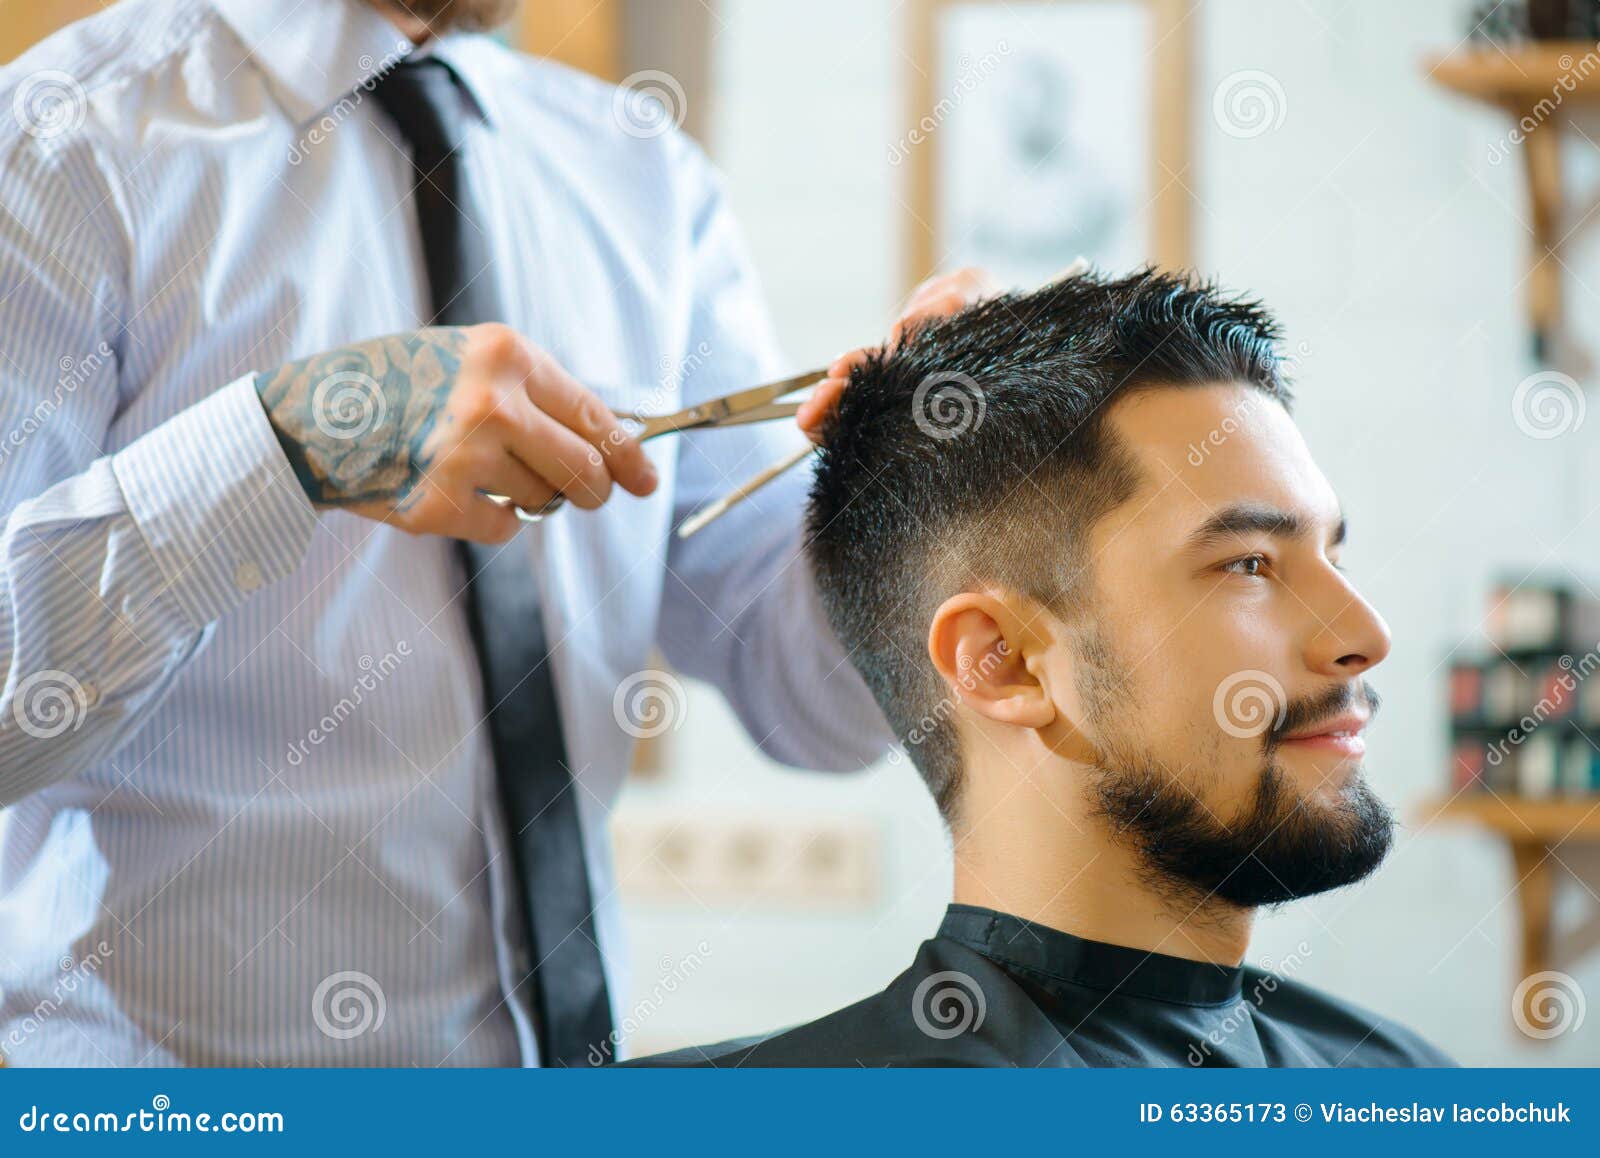 Professional Barber Making Haircut Stock Image - Image of 